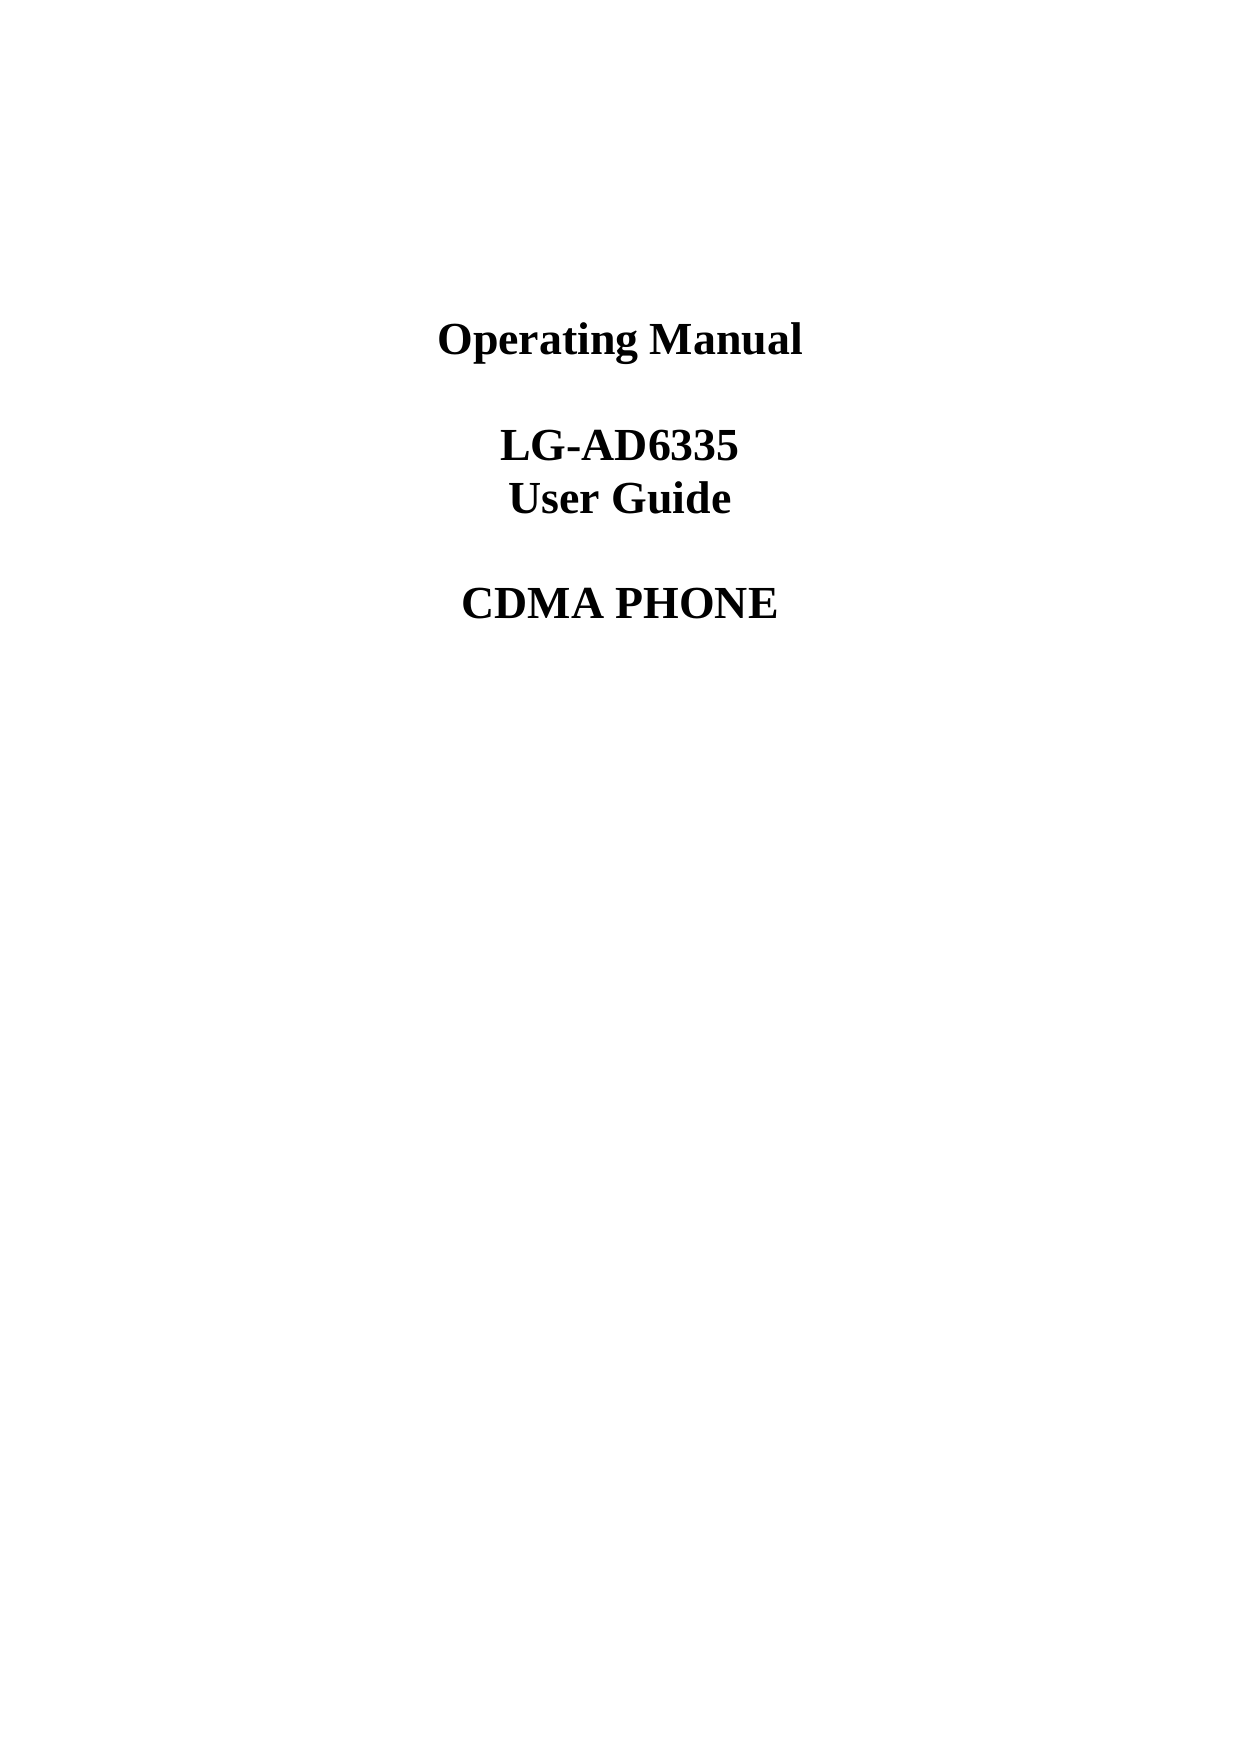   Operating Manual  LG-AD6335 User Guide  CDMA PHONE                          